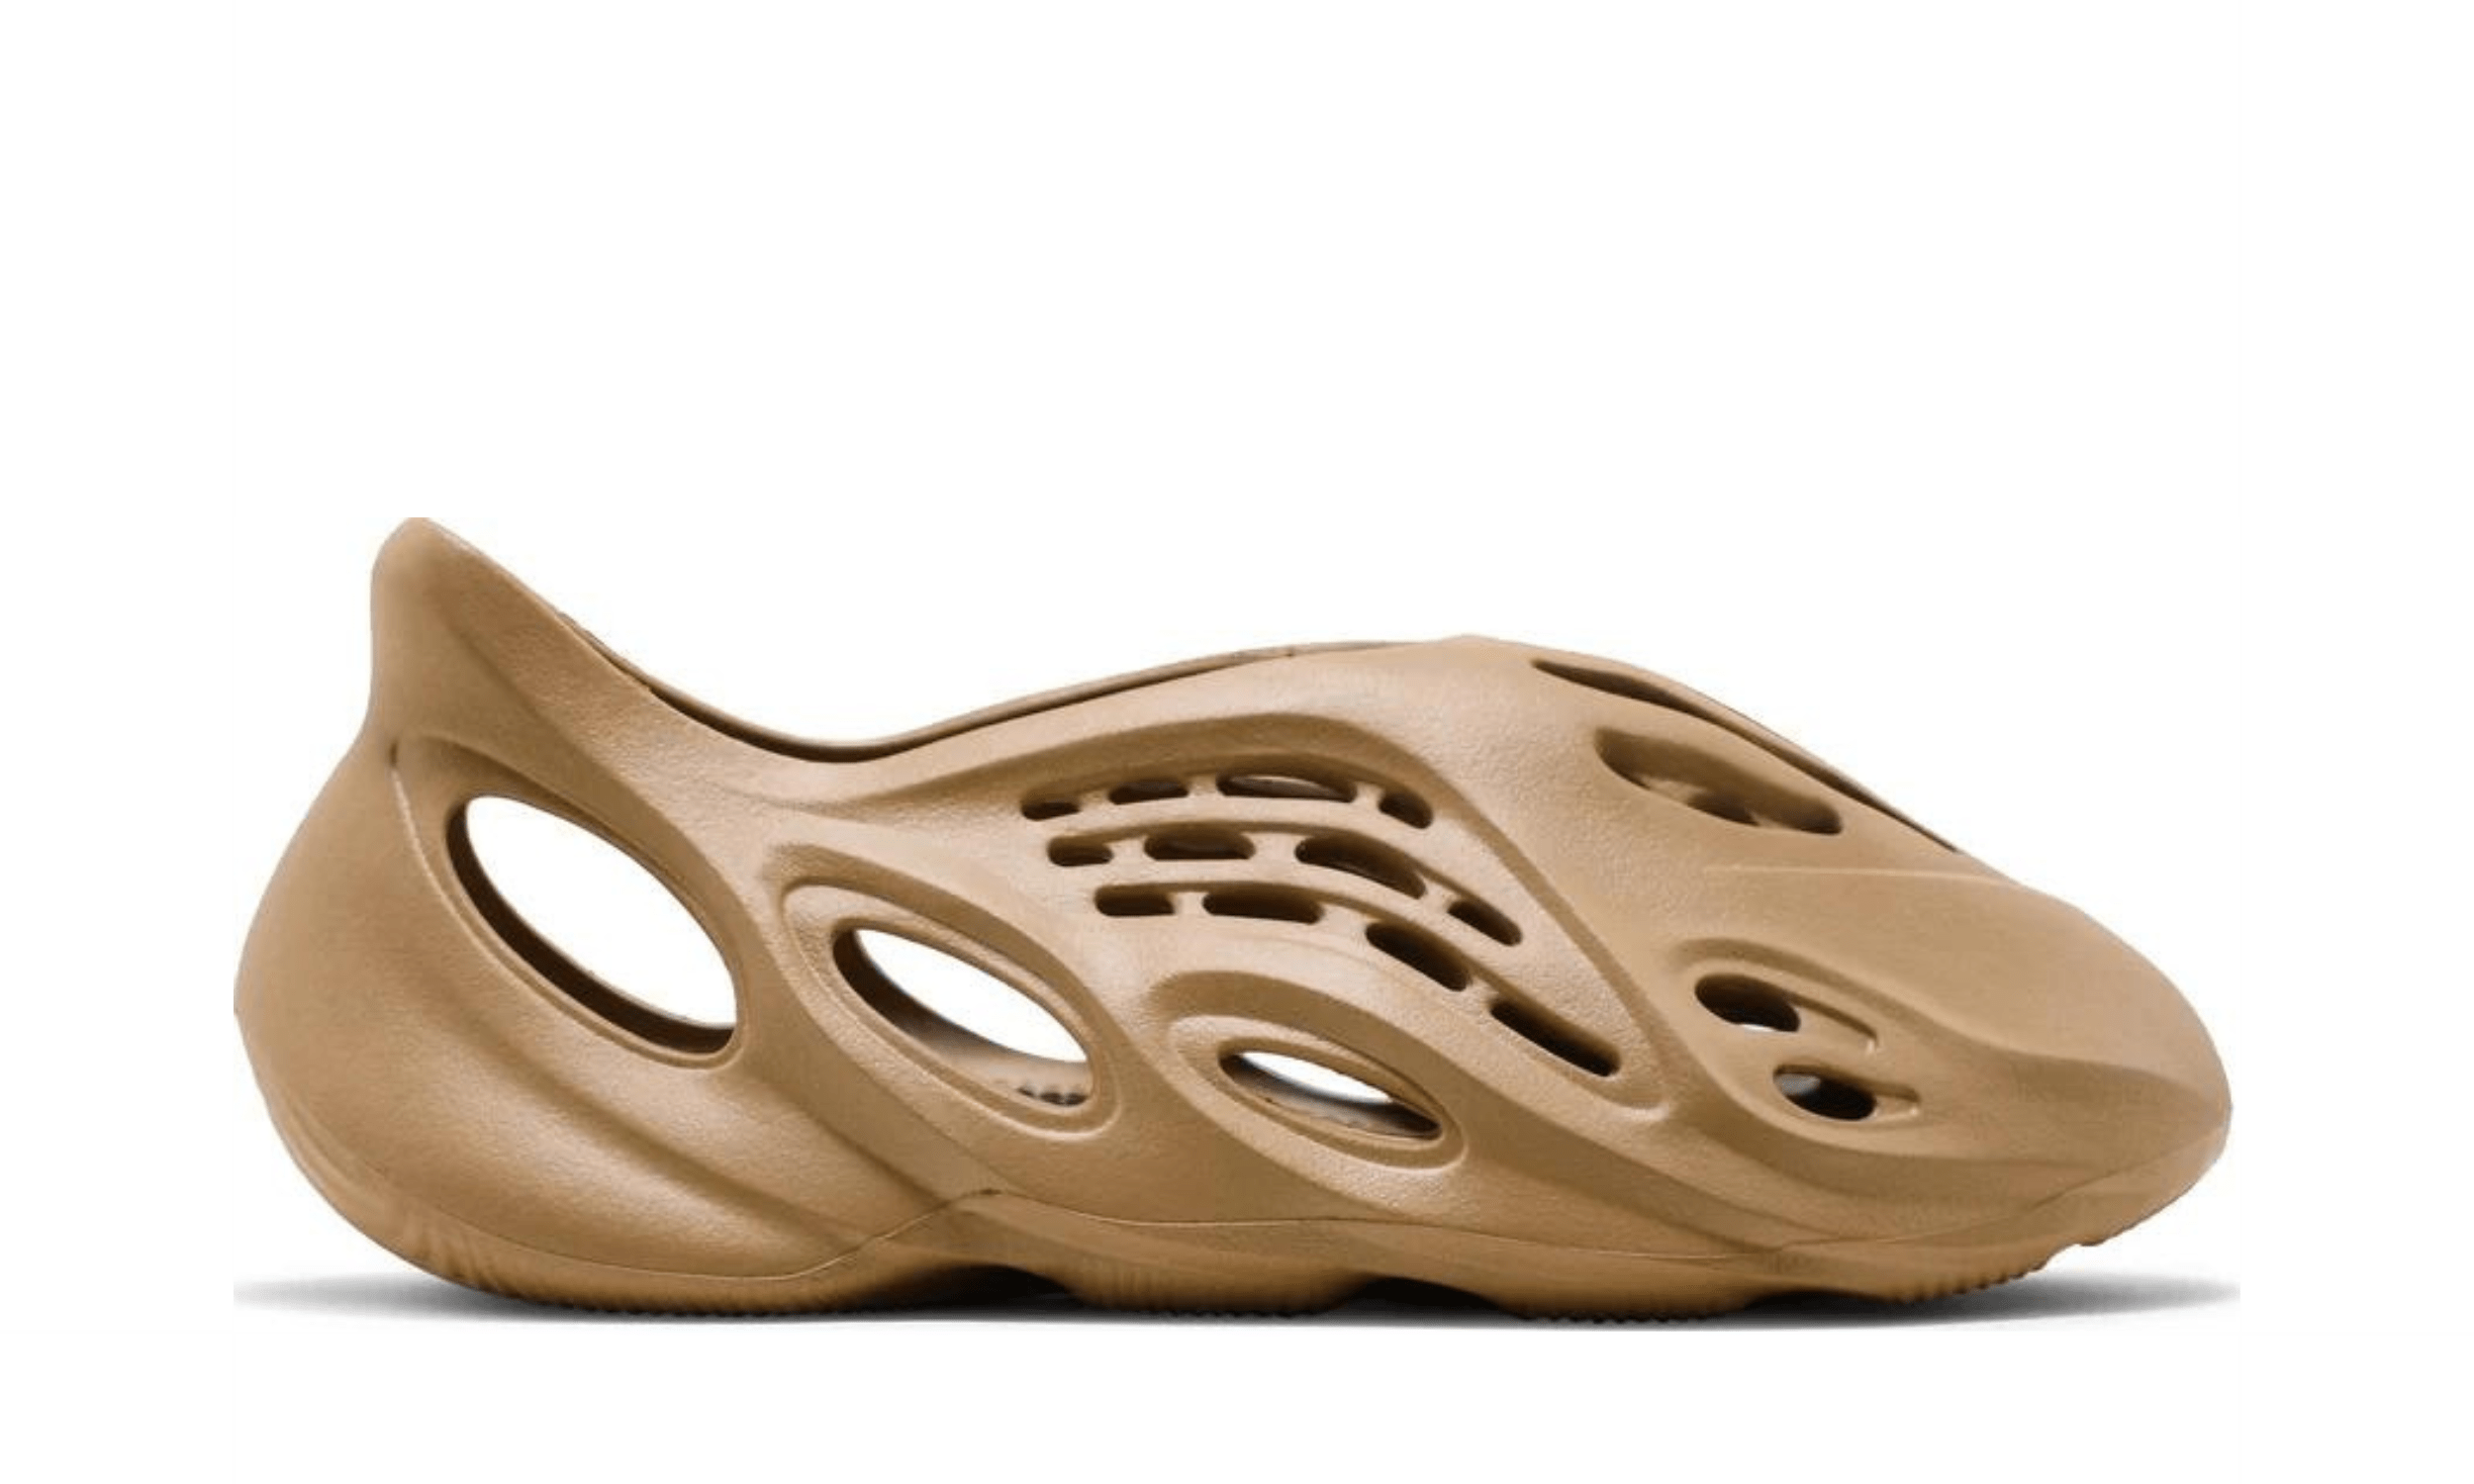 Yeezy Foam Runner Ochre - Kicksite - GW3354